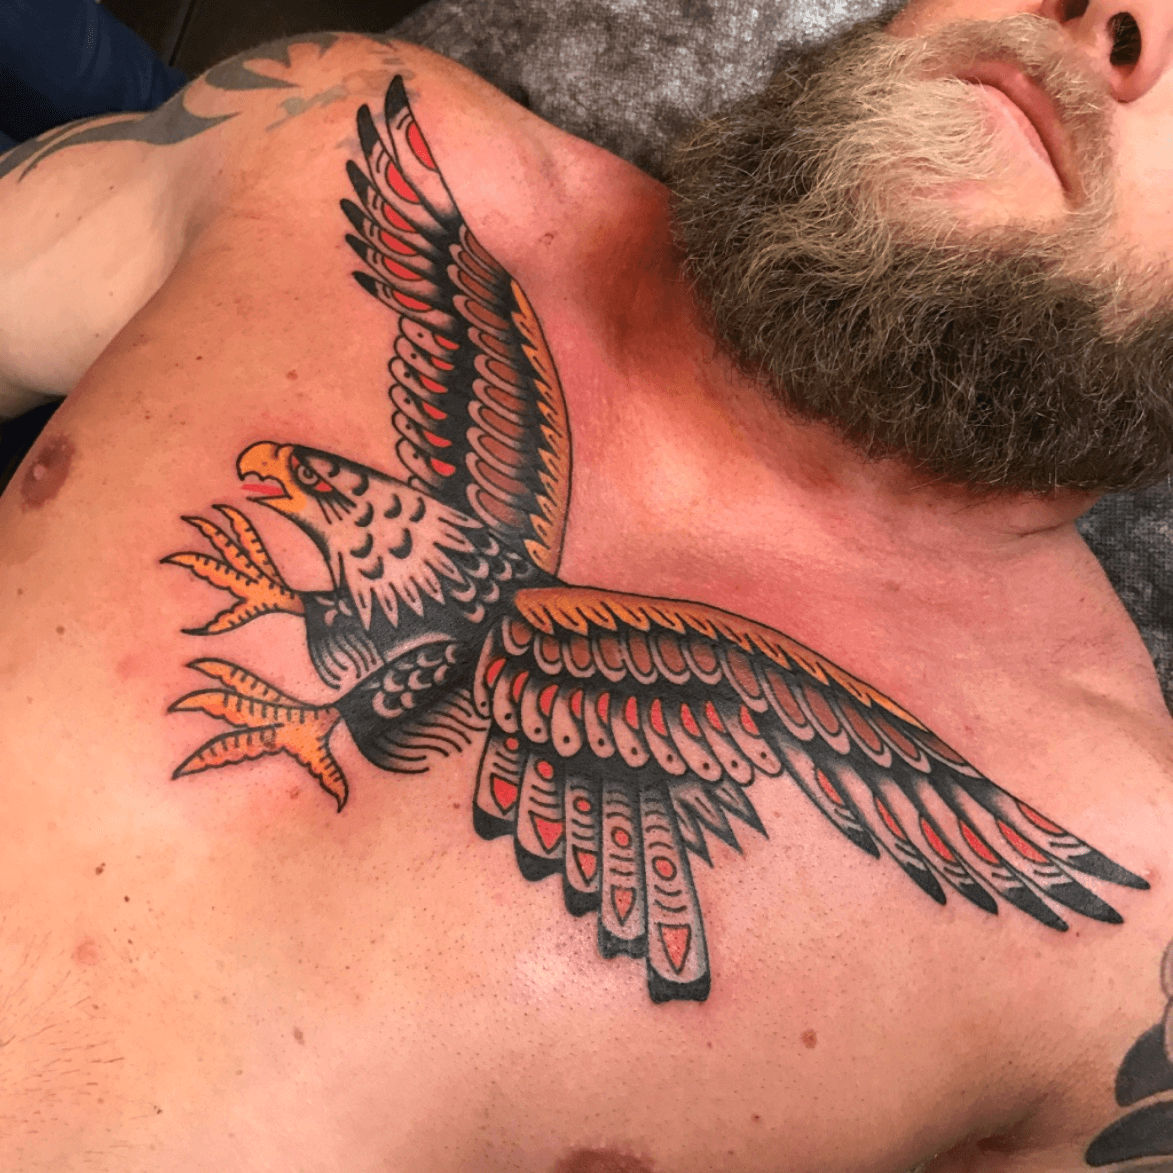 Chris Fernandez on Instagram Finished sleeve for Cody thanks so much   Body art tattoos Body art Tattoos